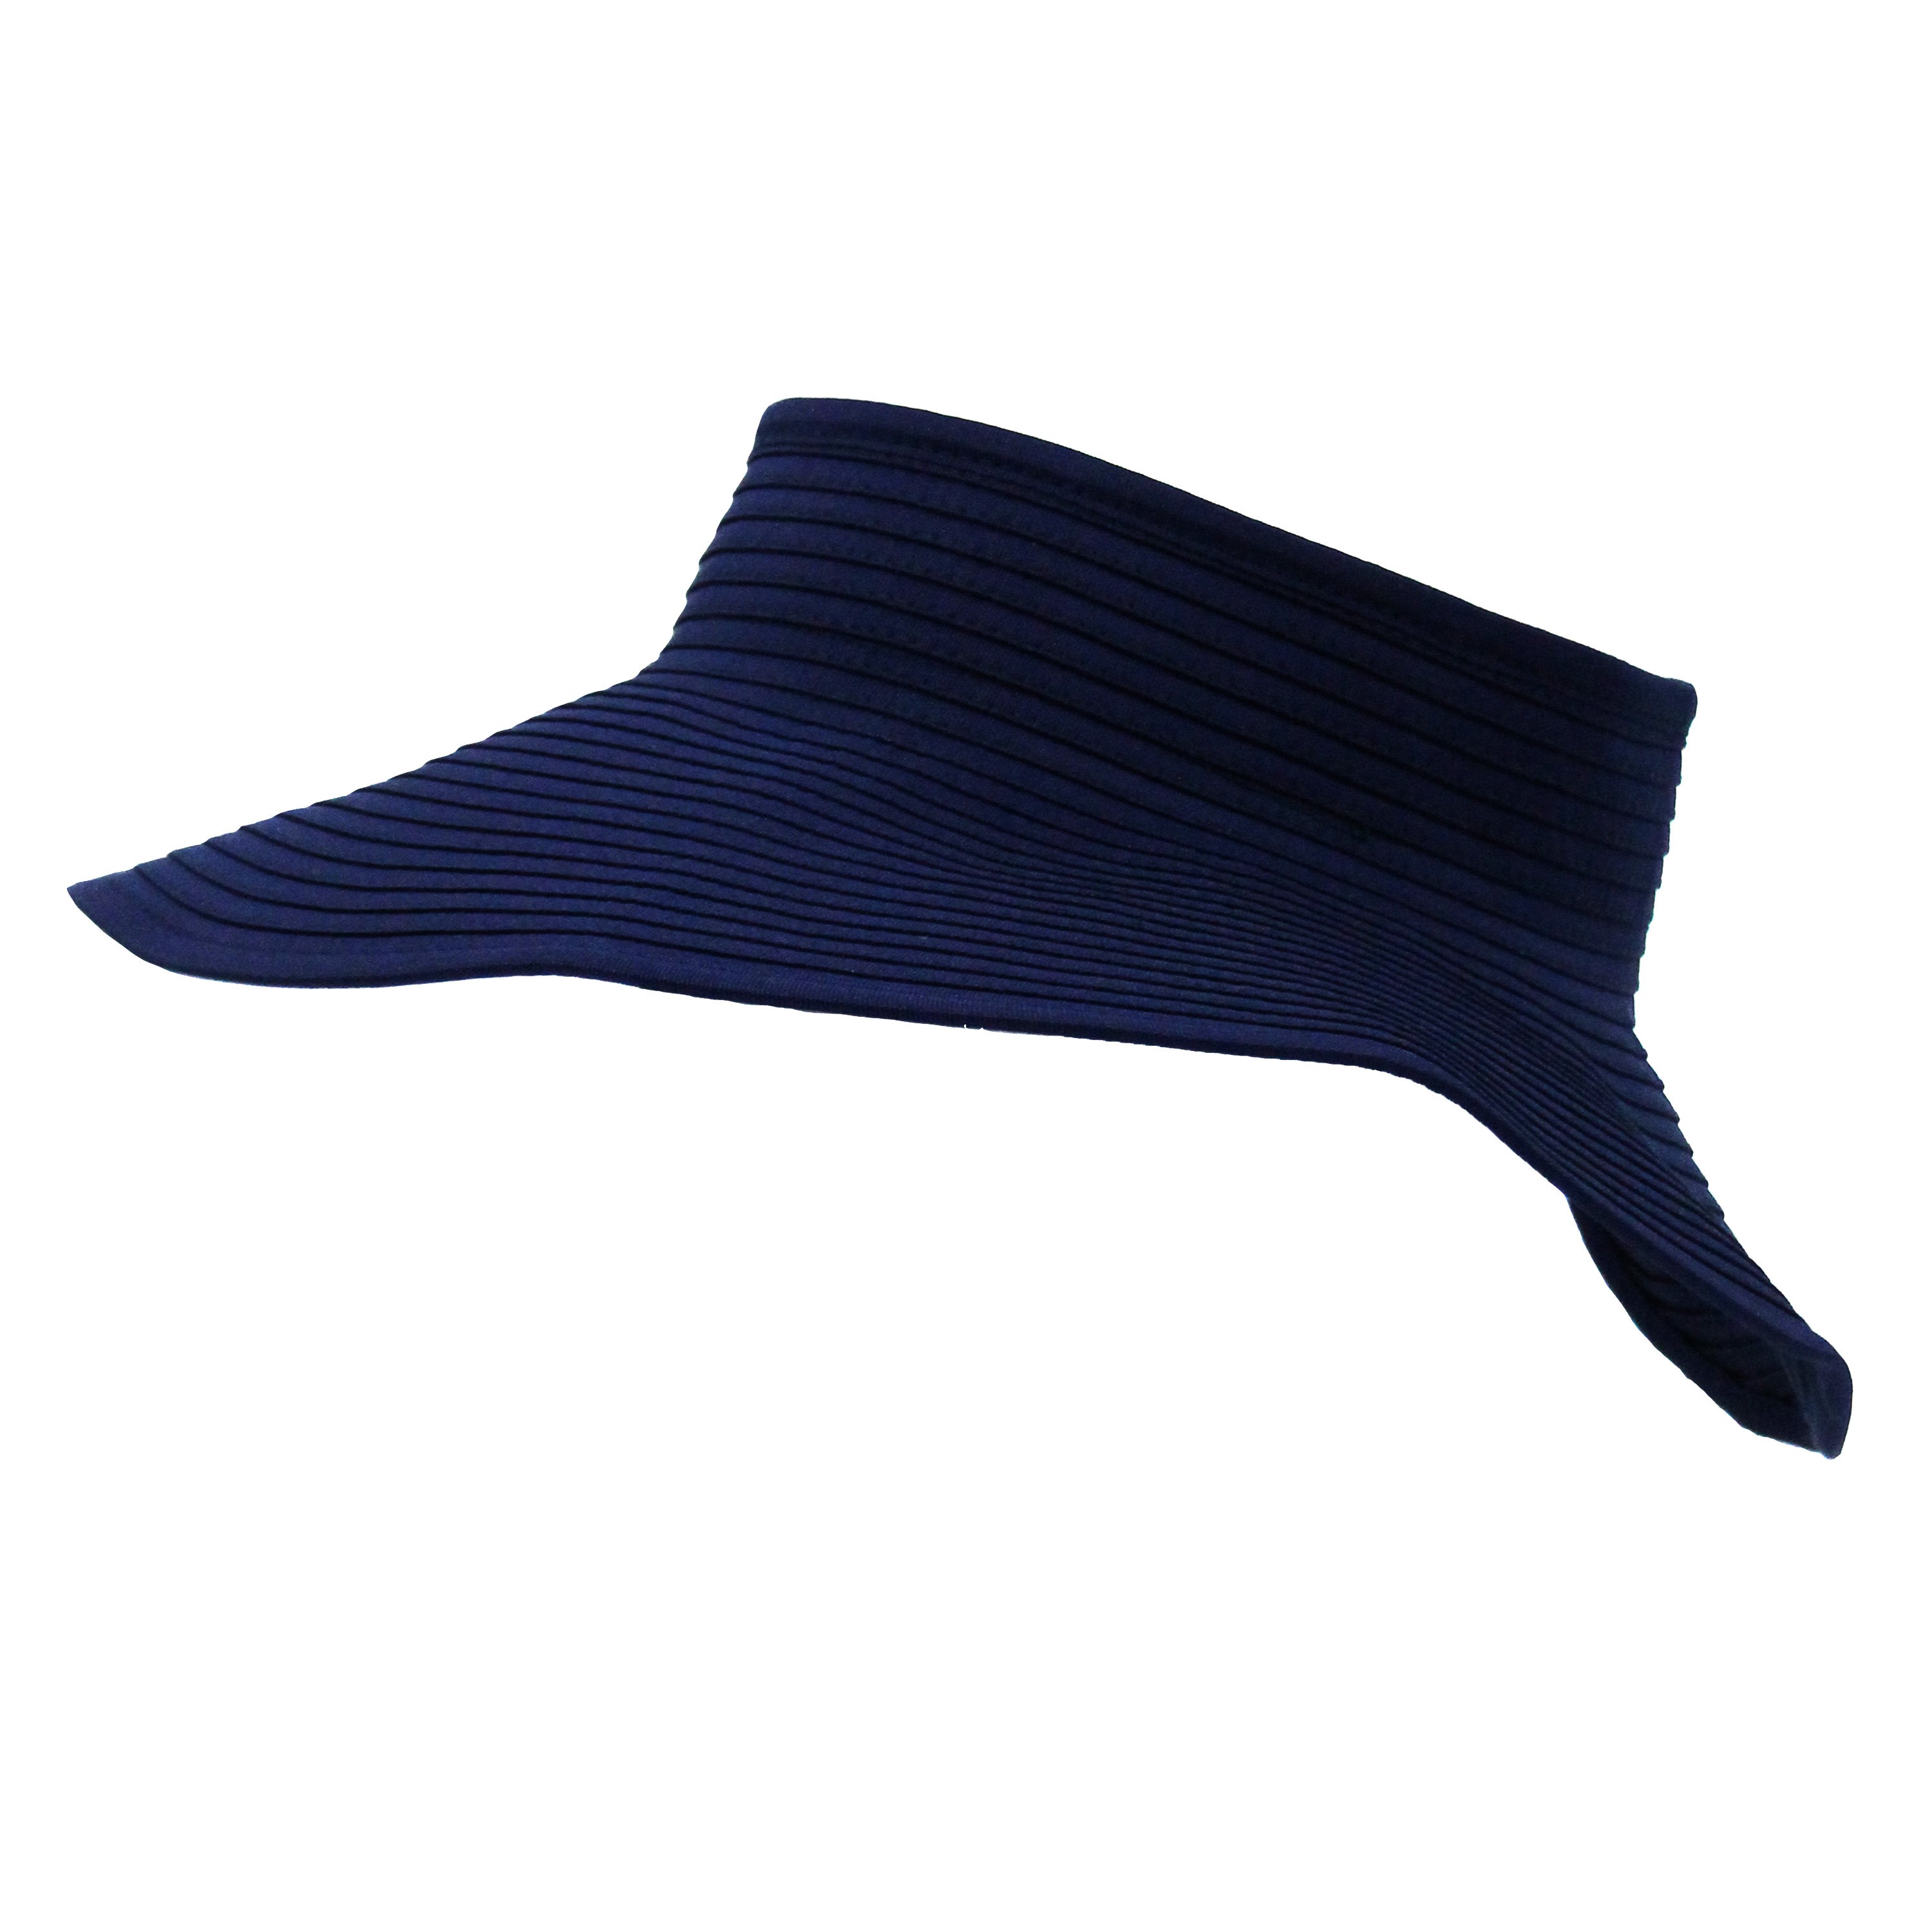 Dropship Sun Visors For Women Wide Brim Straw Hat, UV Protection